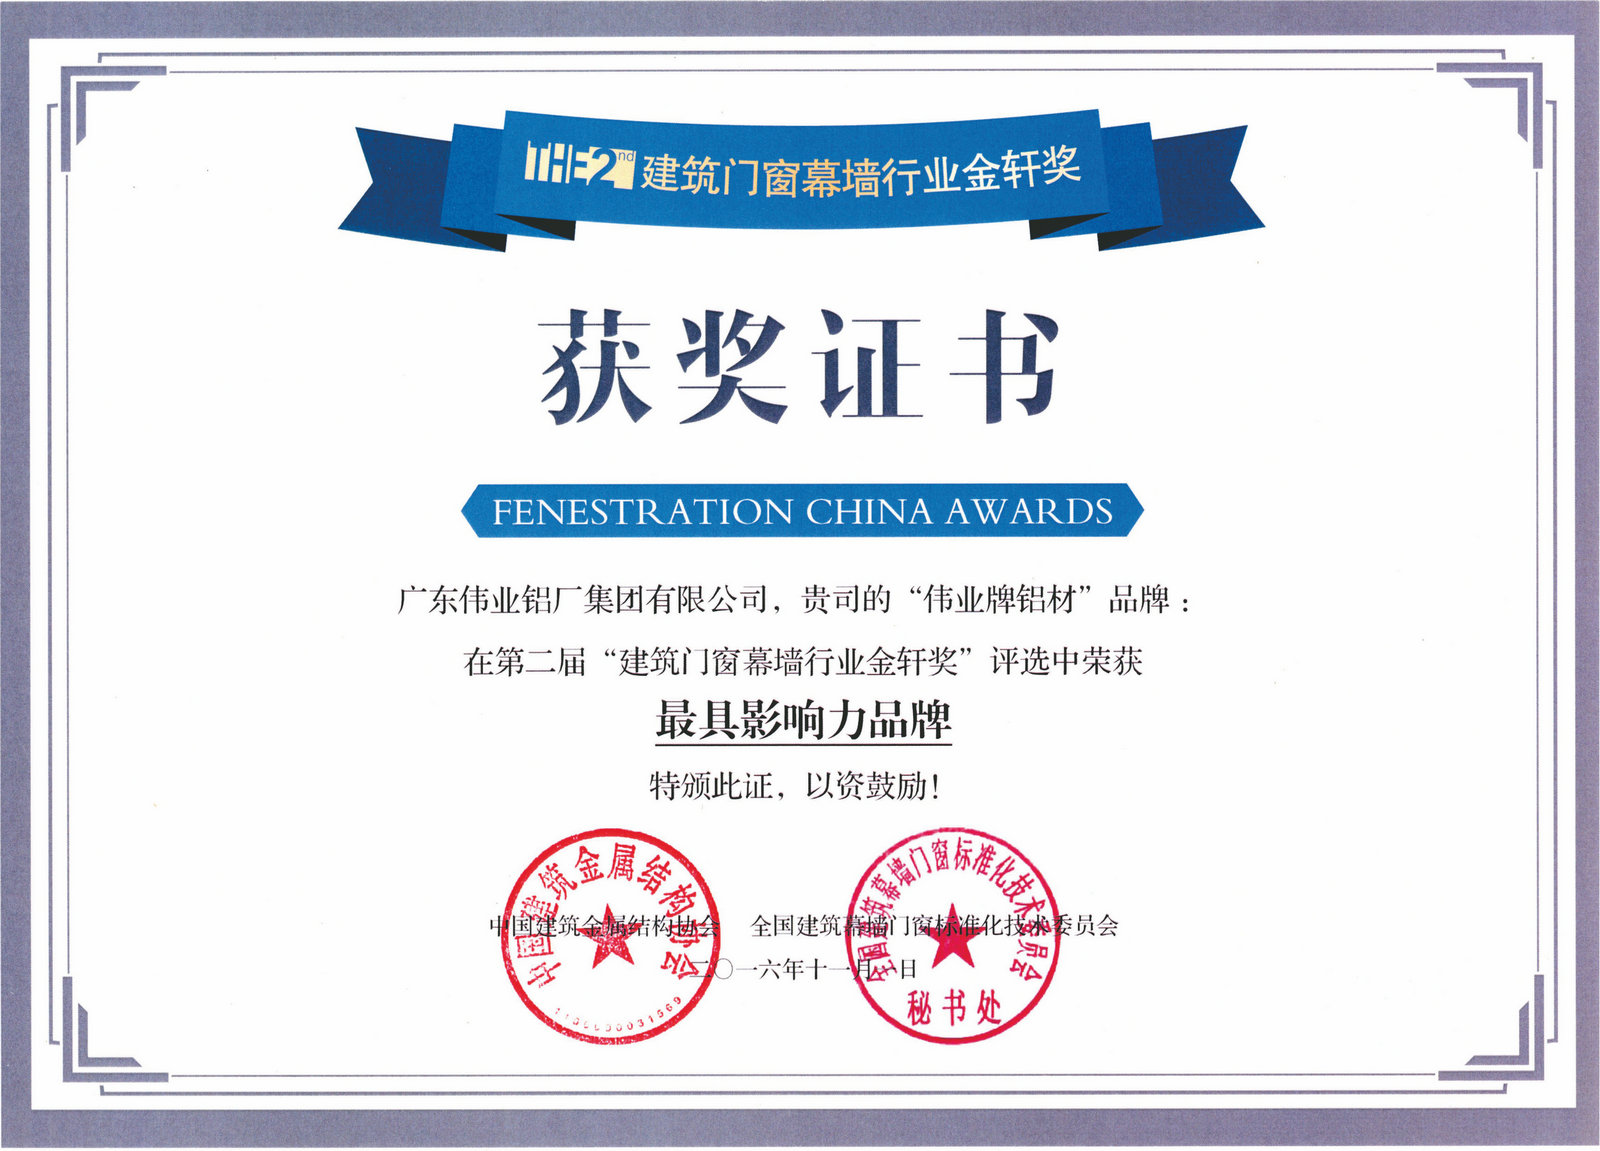 “Jinxuan Awards Most Influential Brand”